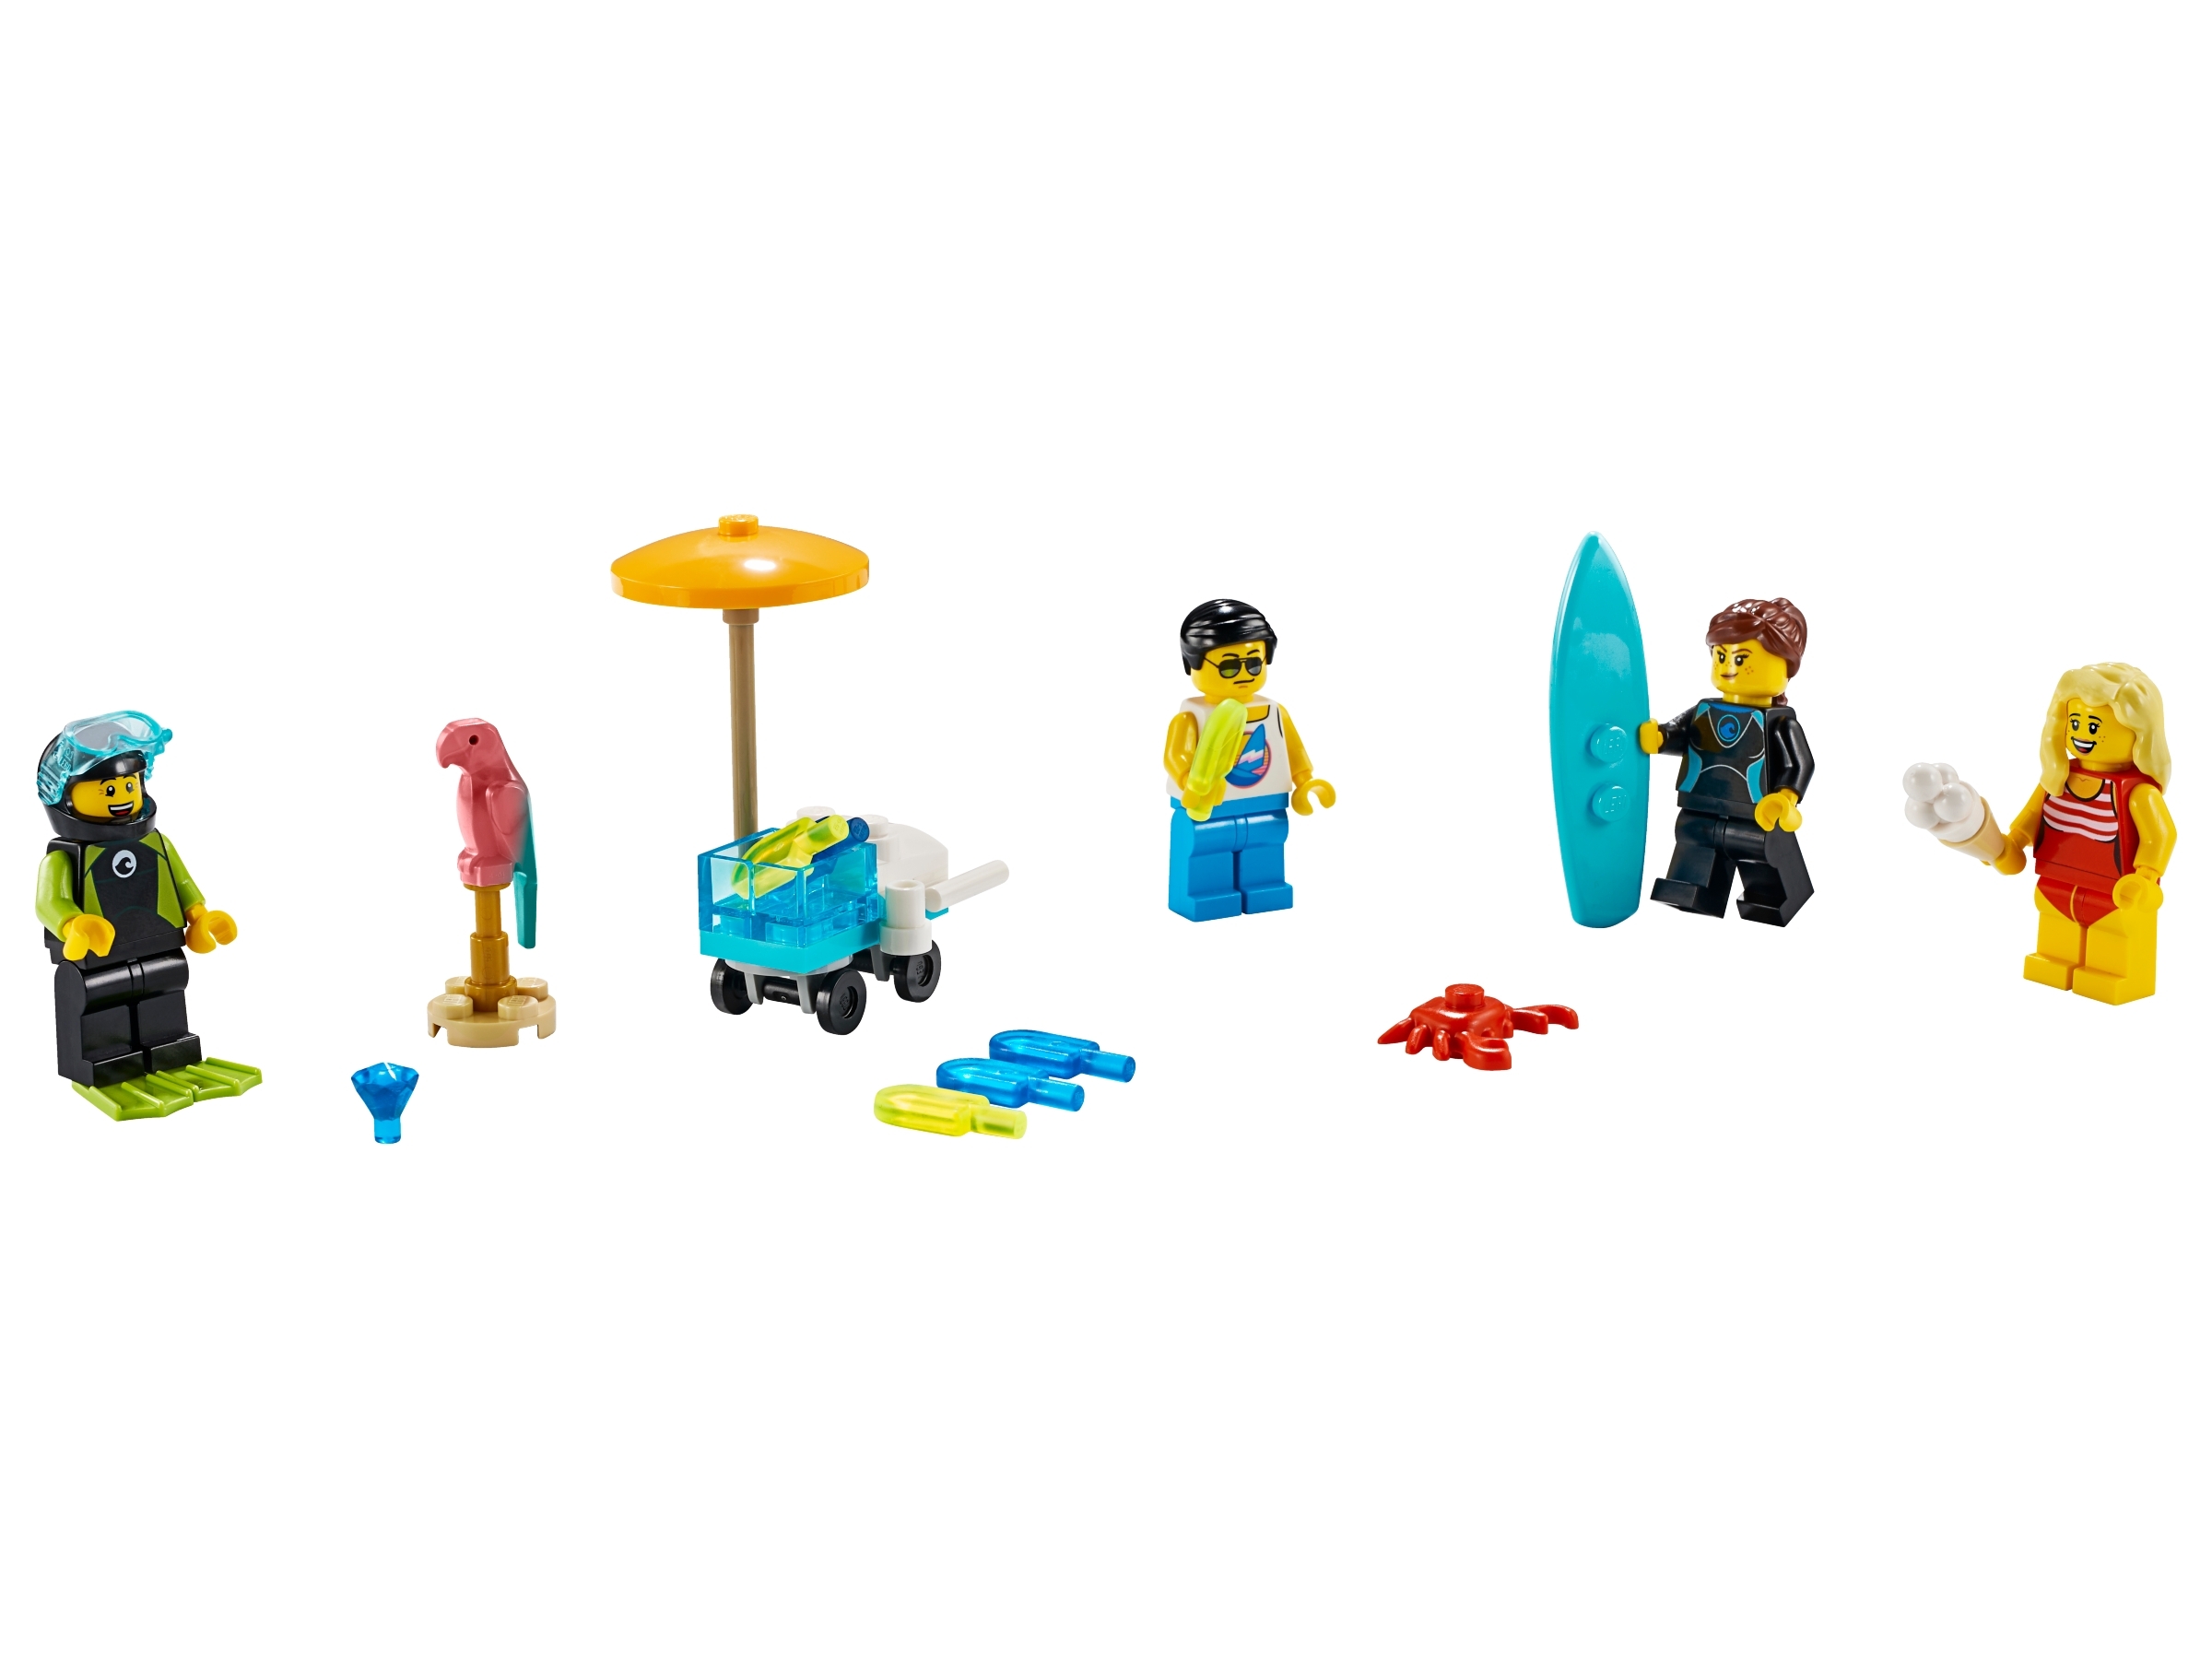 lego characters to buy